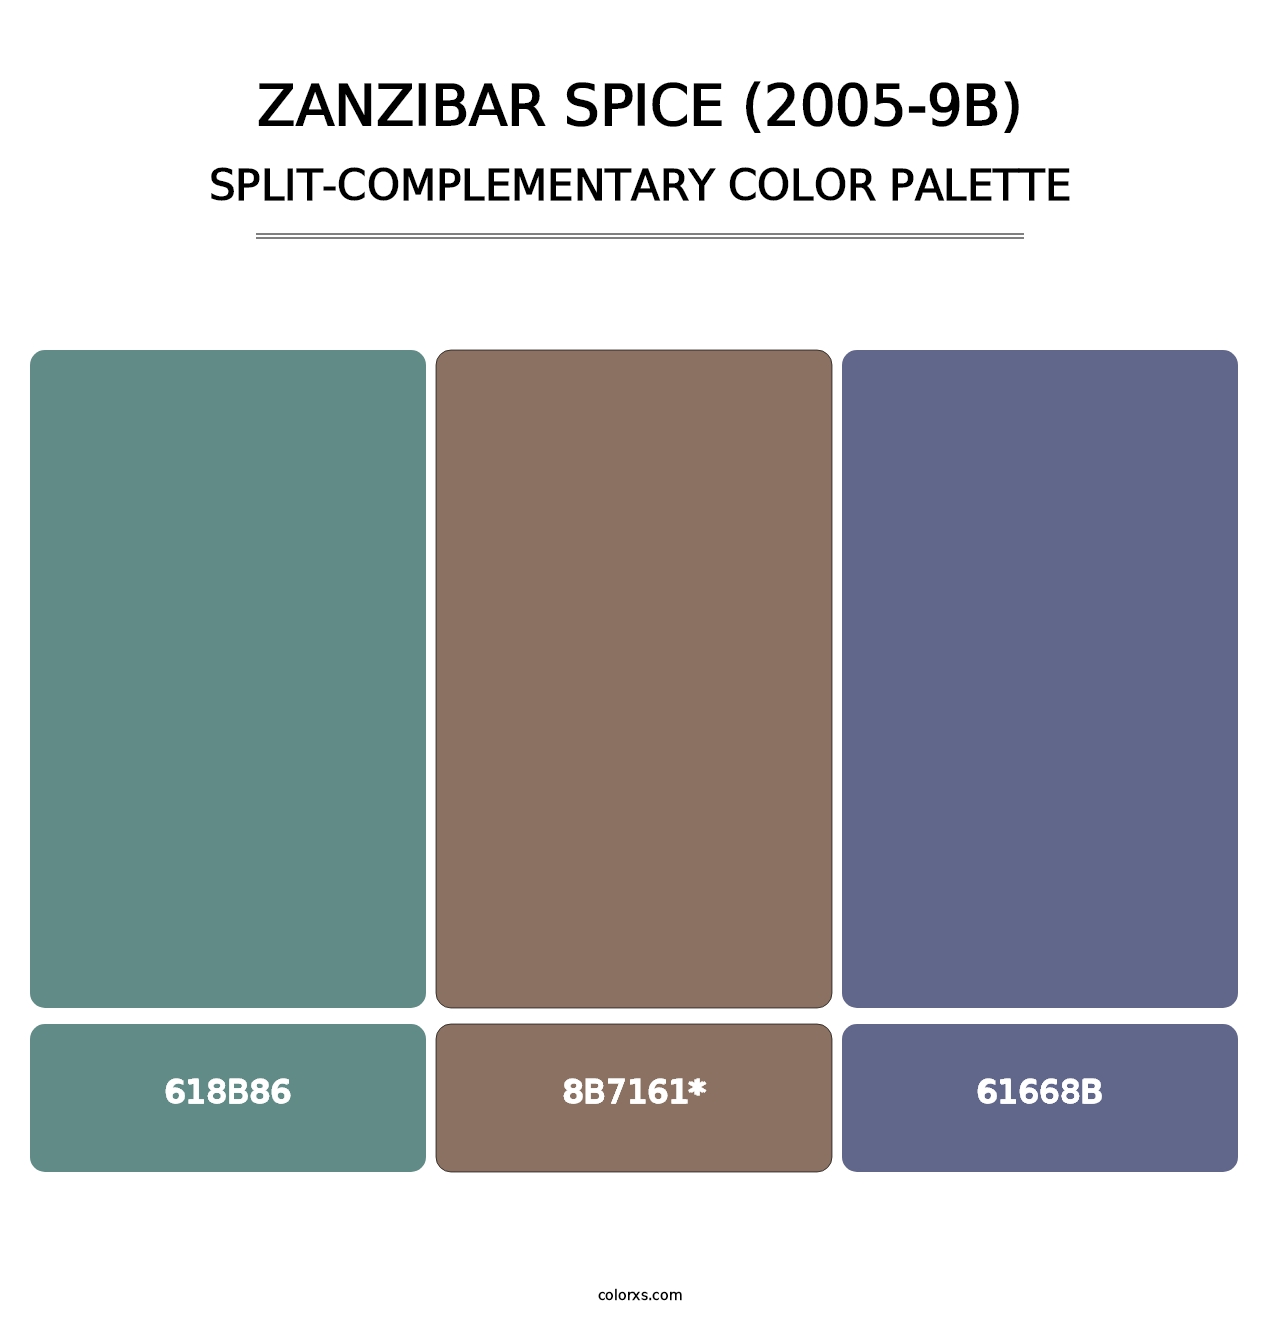 Zanzibar Spice (2005-9B) - Split-Complementary Color Palette